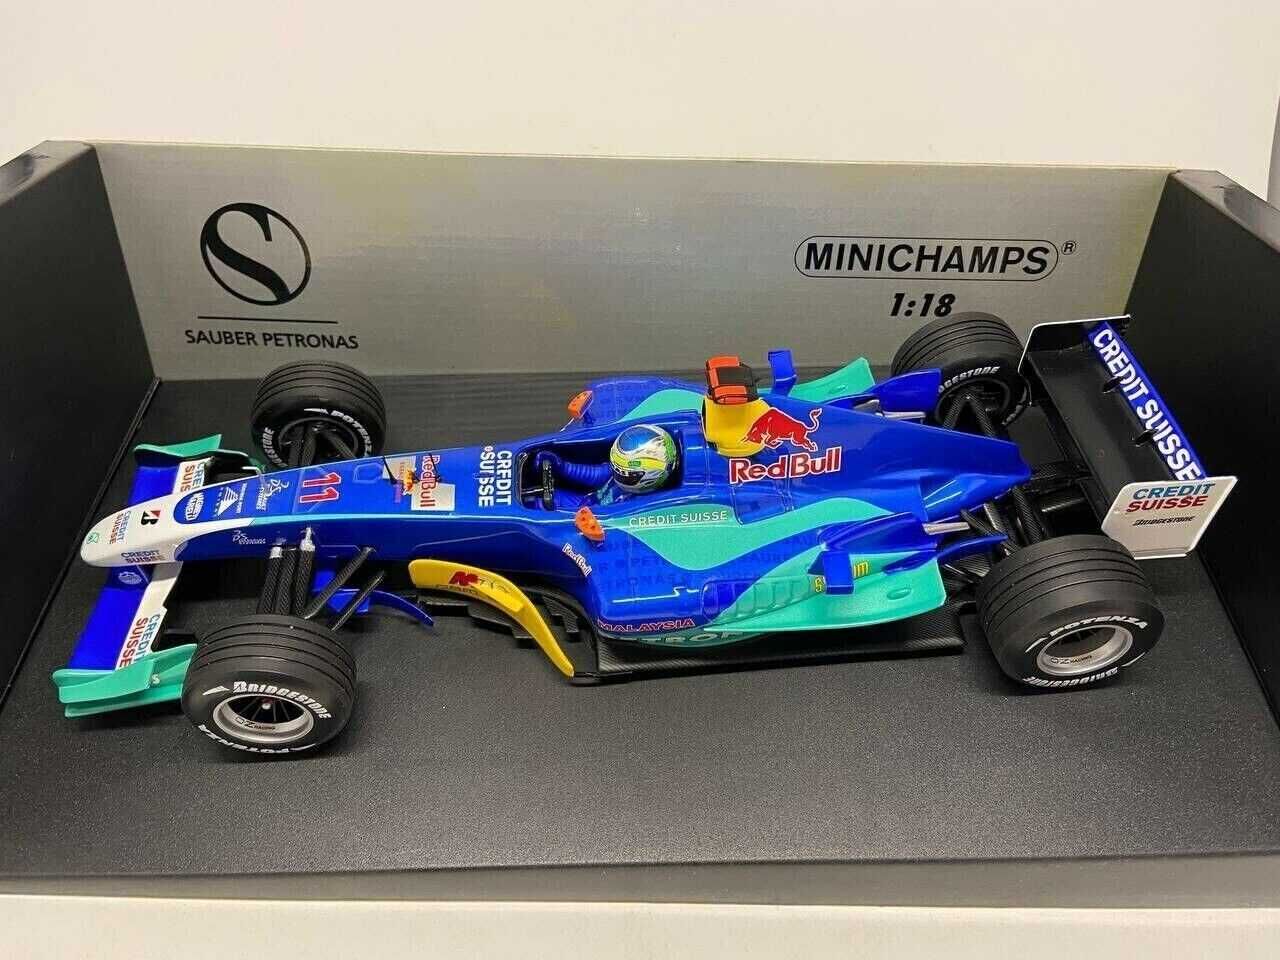 Minichamps 1/18 F1 Red Bull G. Fisichella